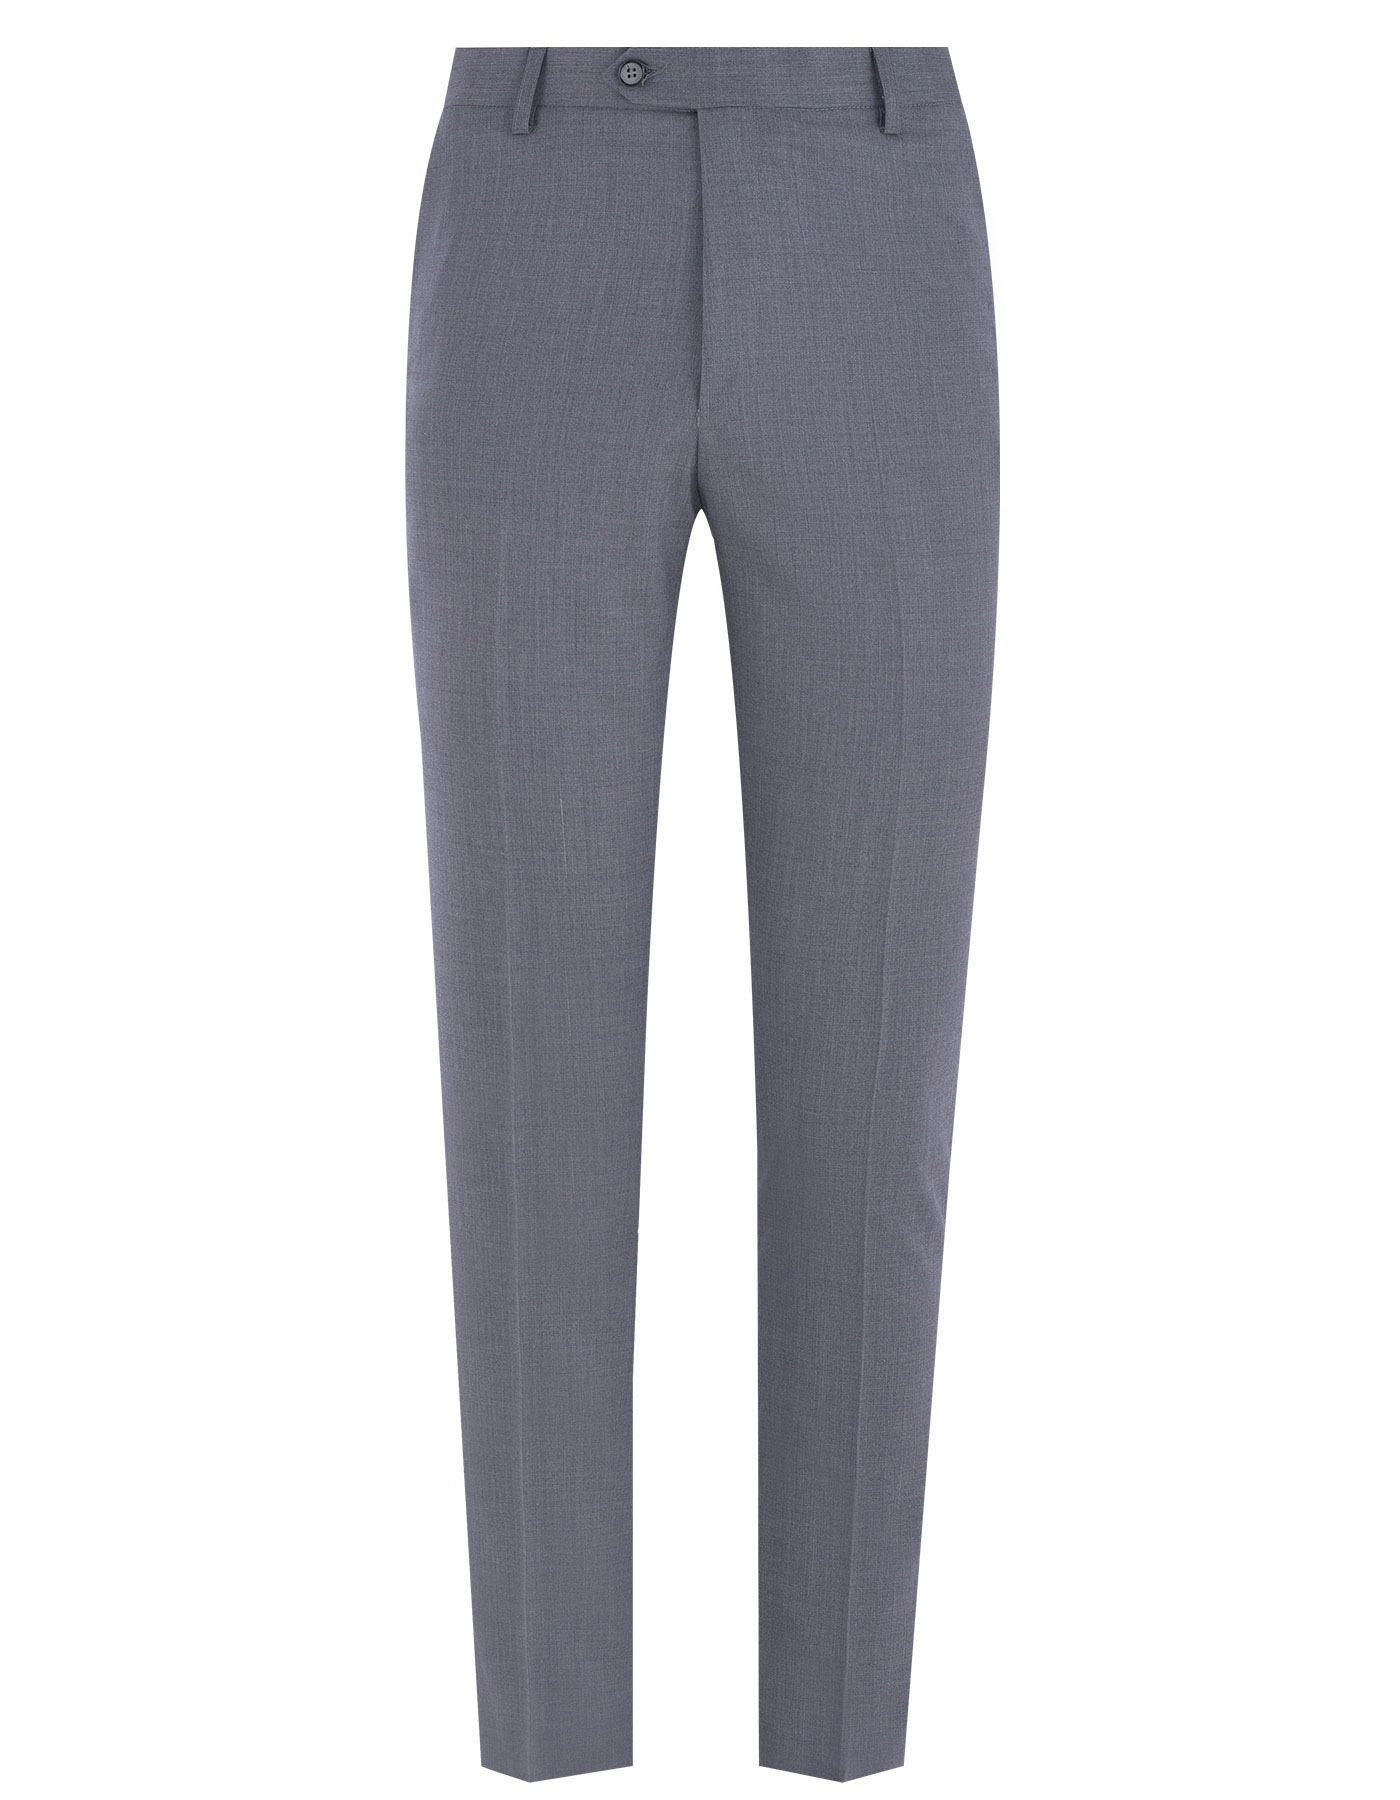 Buy Men Grey Formal Trouser Online Shopping In Pakistan | Uniworth